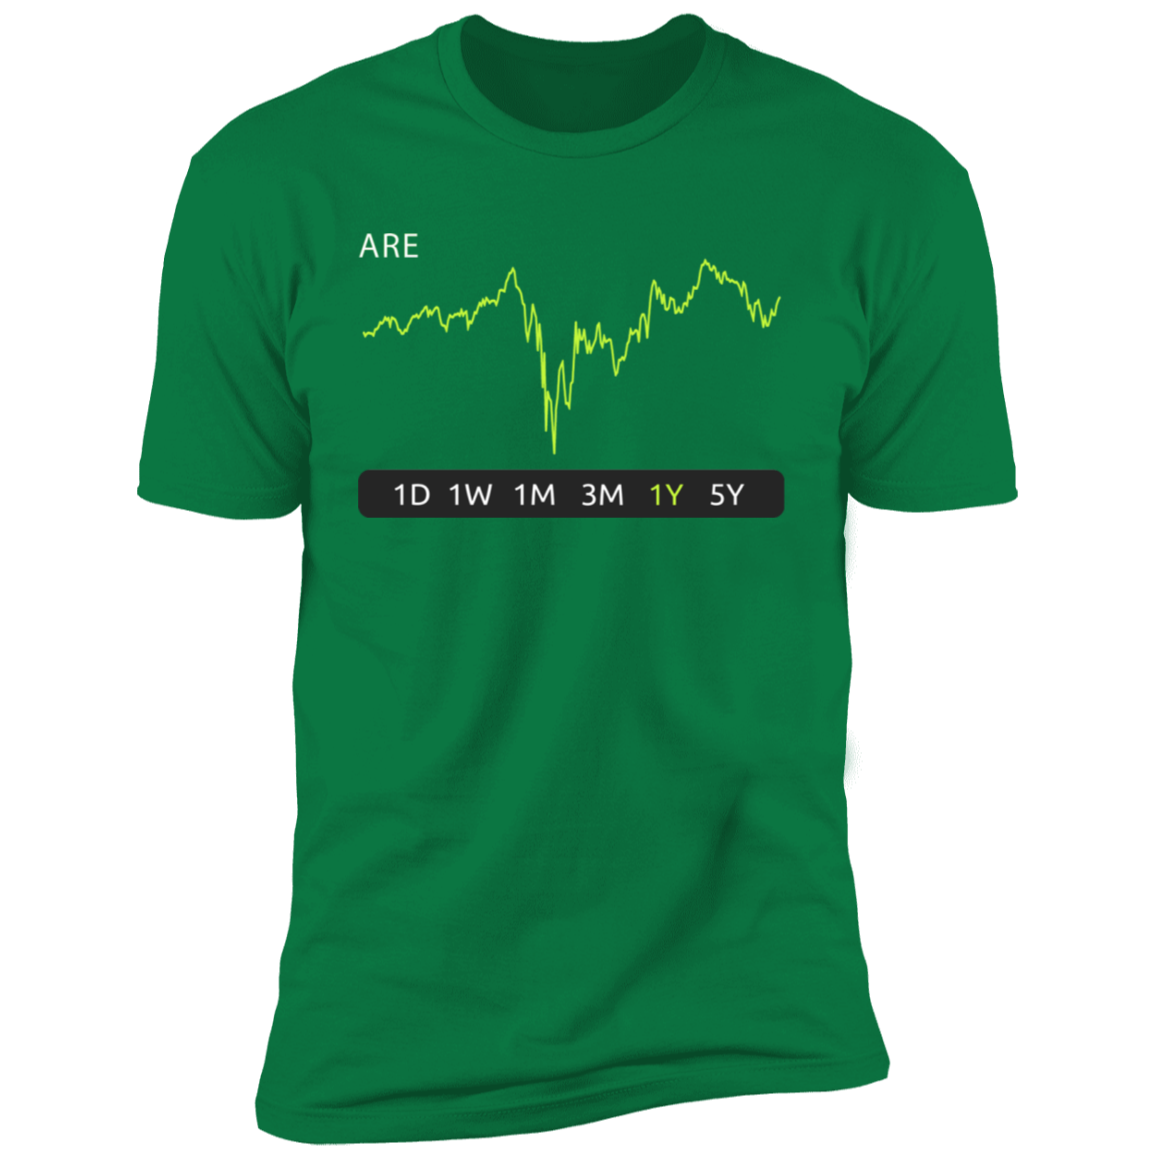 ARE Stock 1y Premium T-Shirt